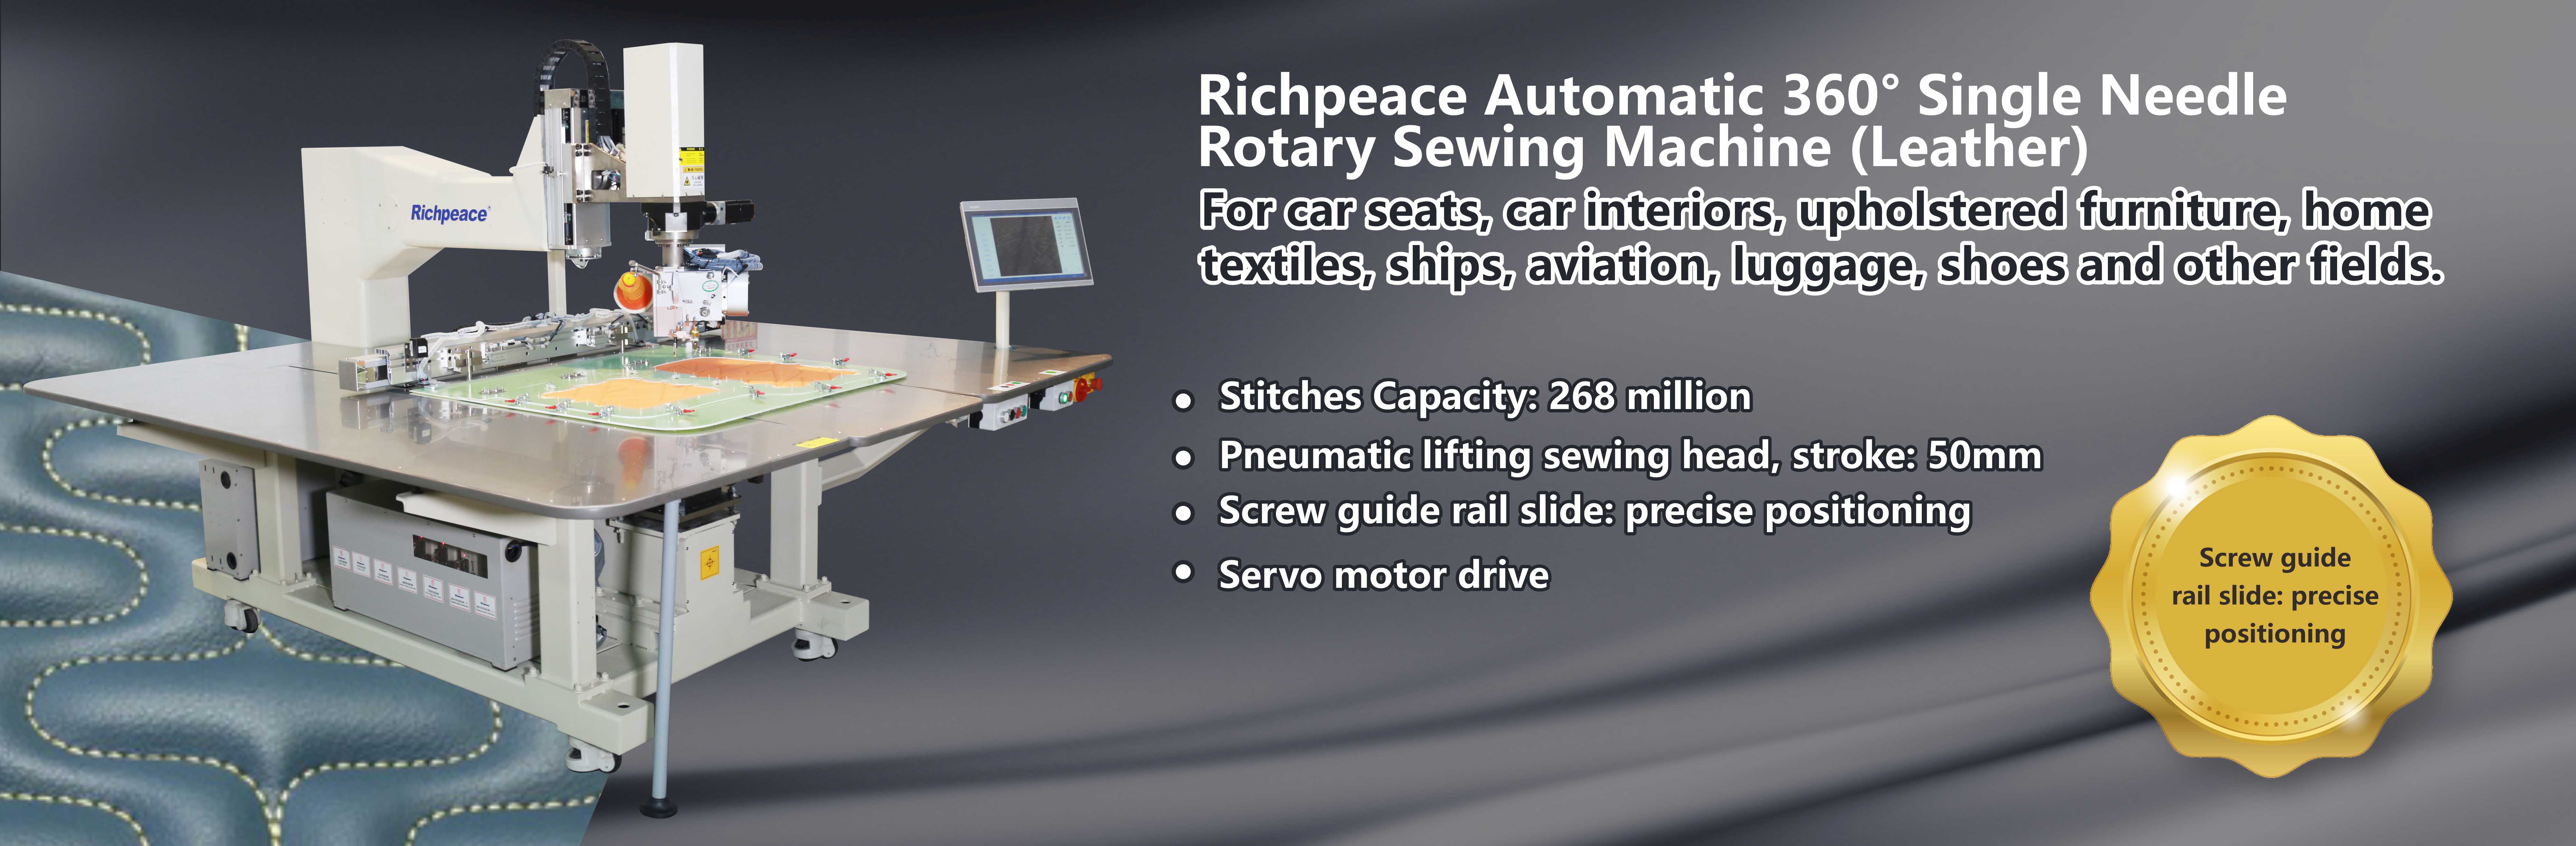 Ricpeace automatic 360-degree rotating single needle sewing machine_Automotive